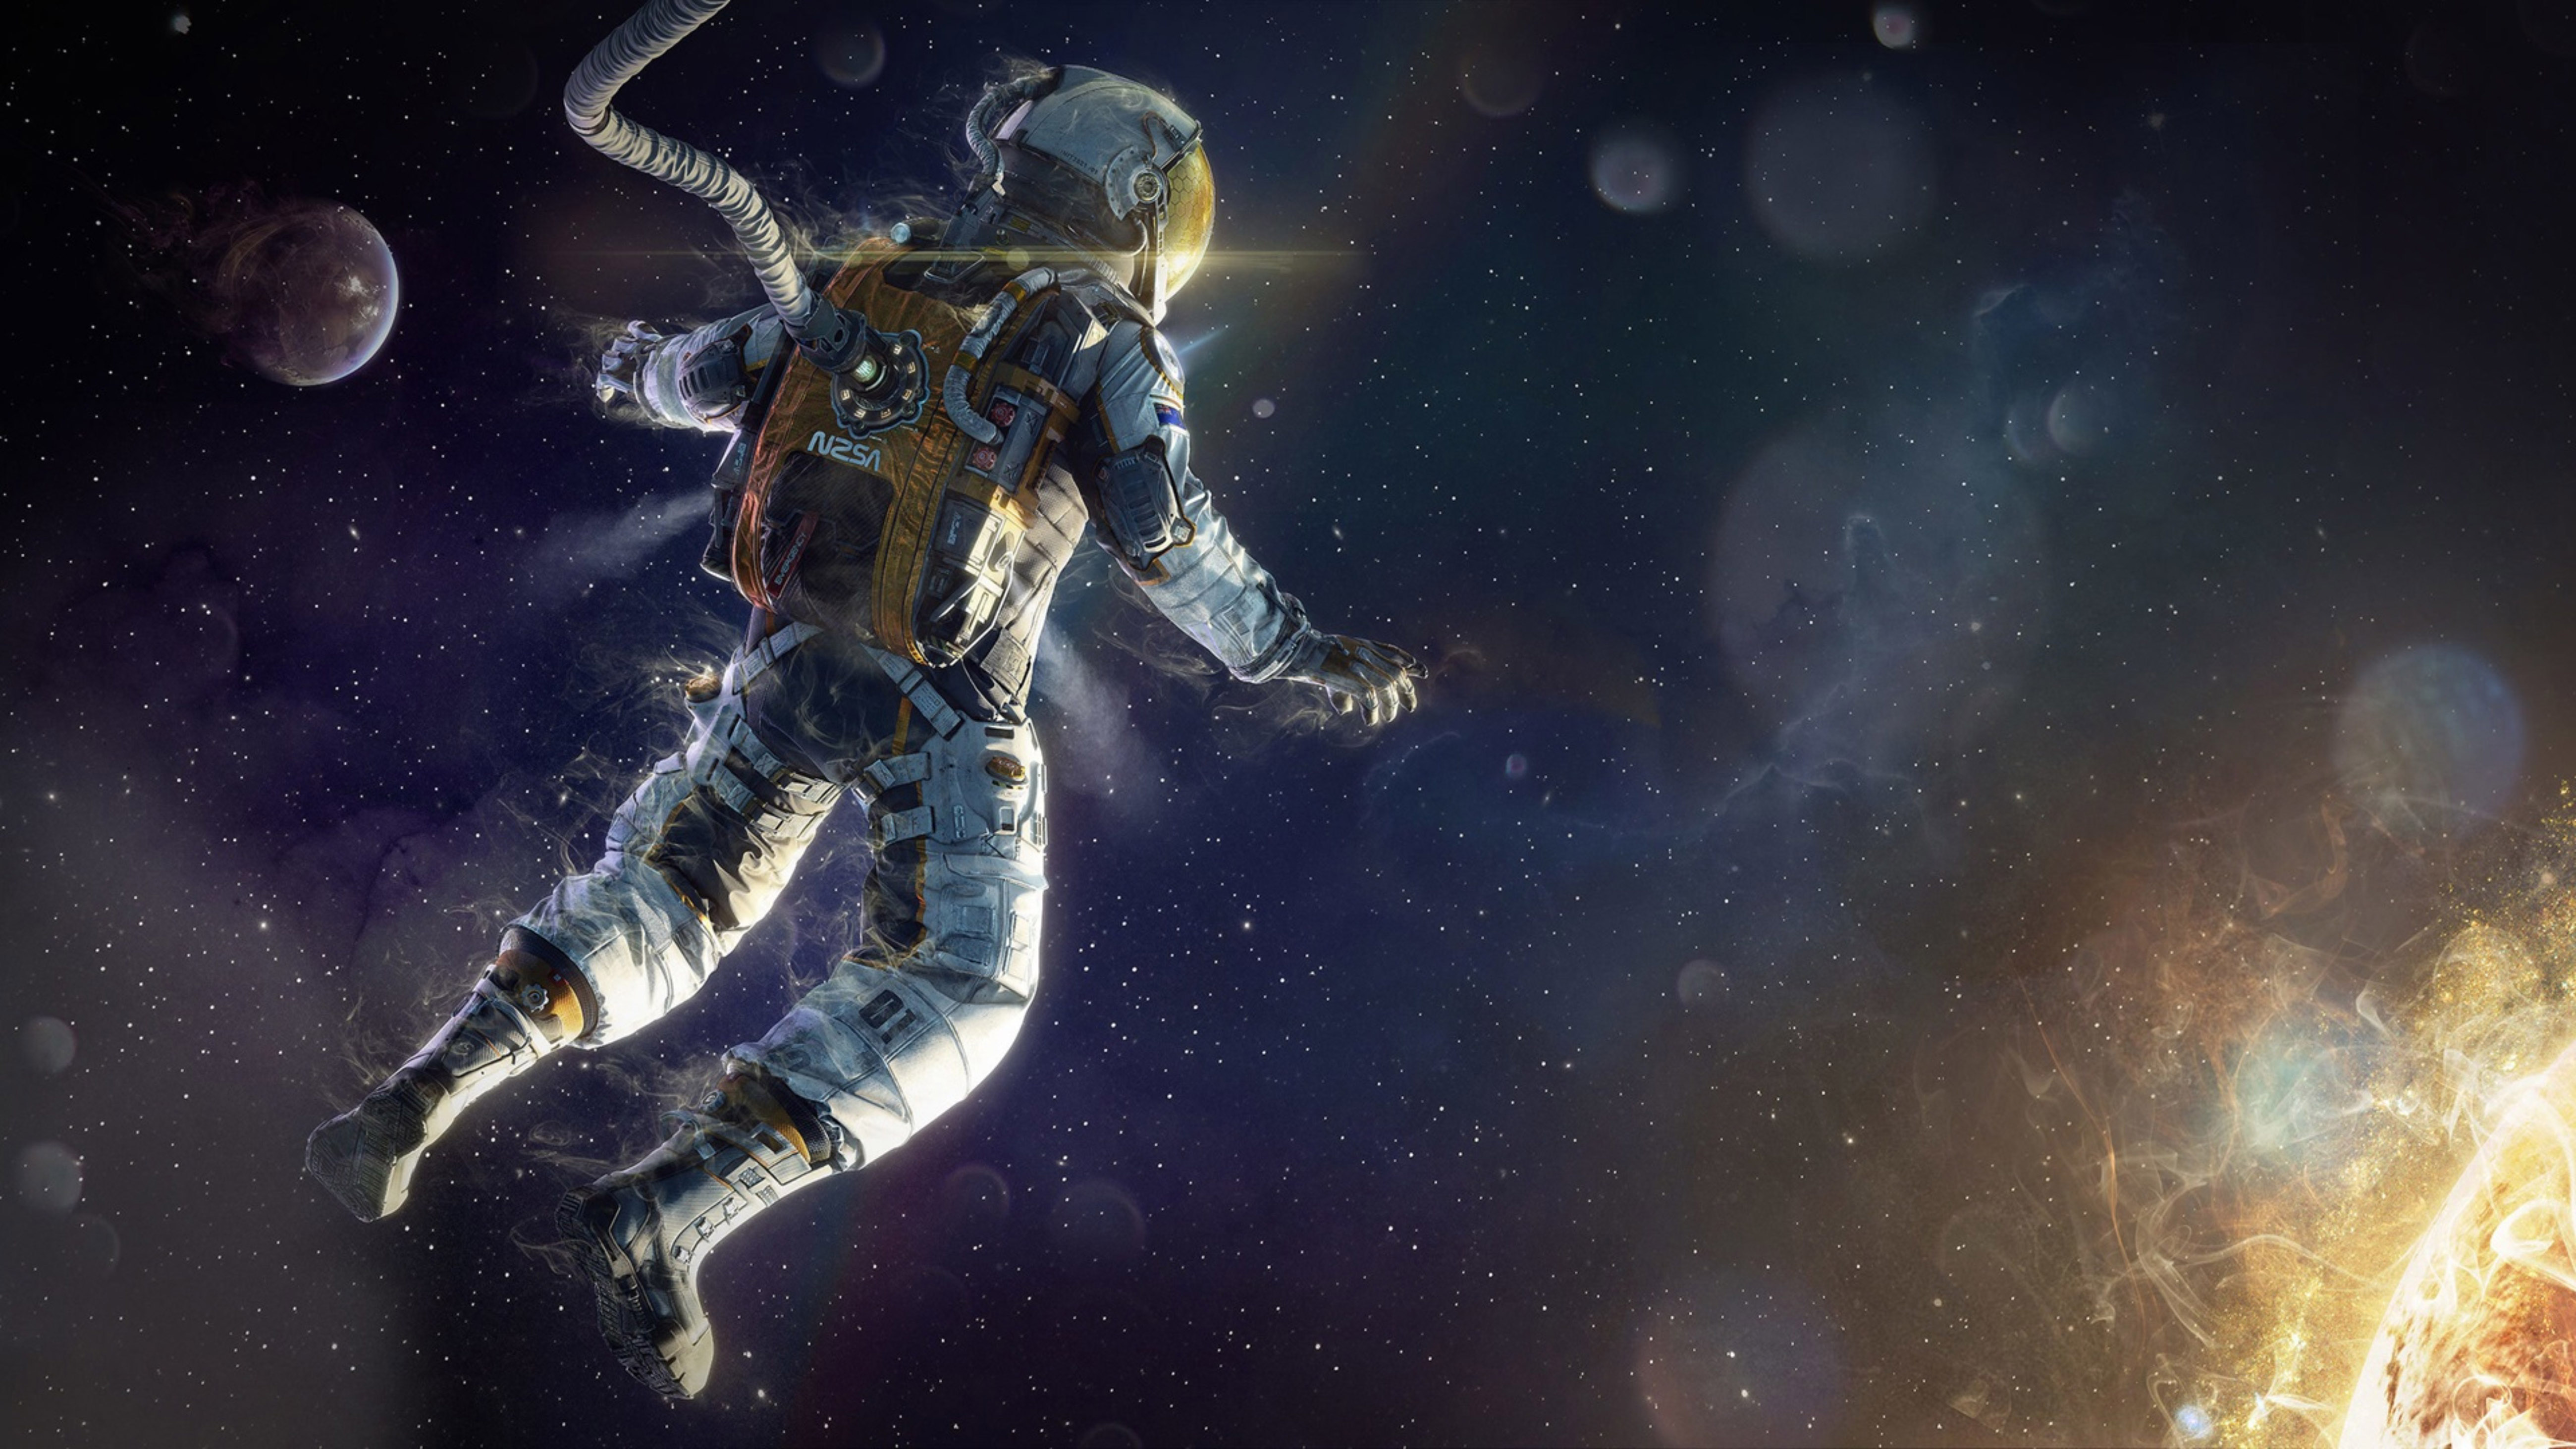 Astronaut Walk In Space Space Art Wallpapers Hd For Desktop Mobile